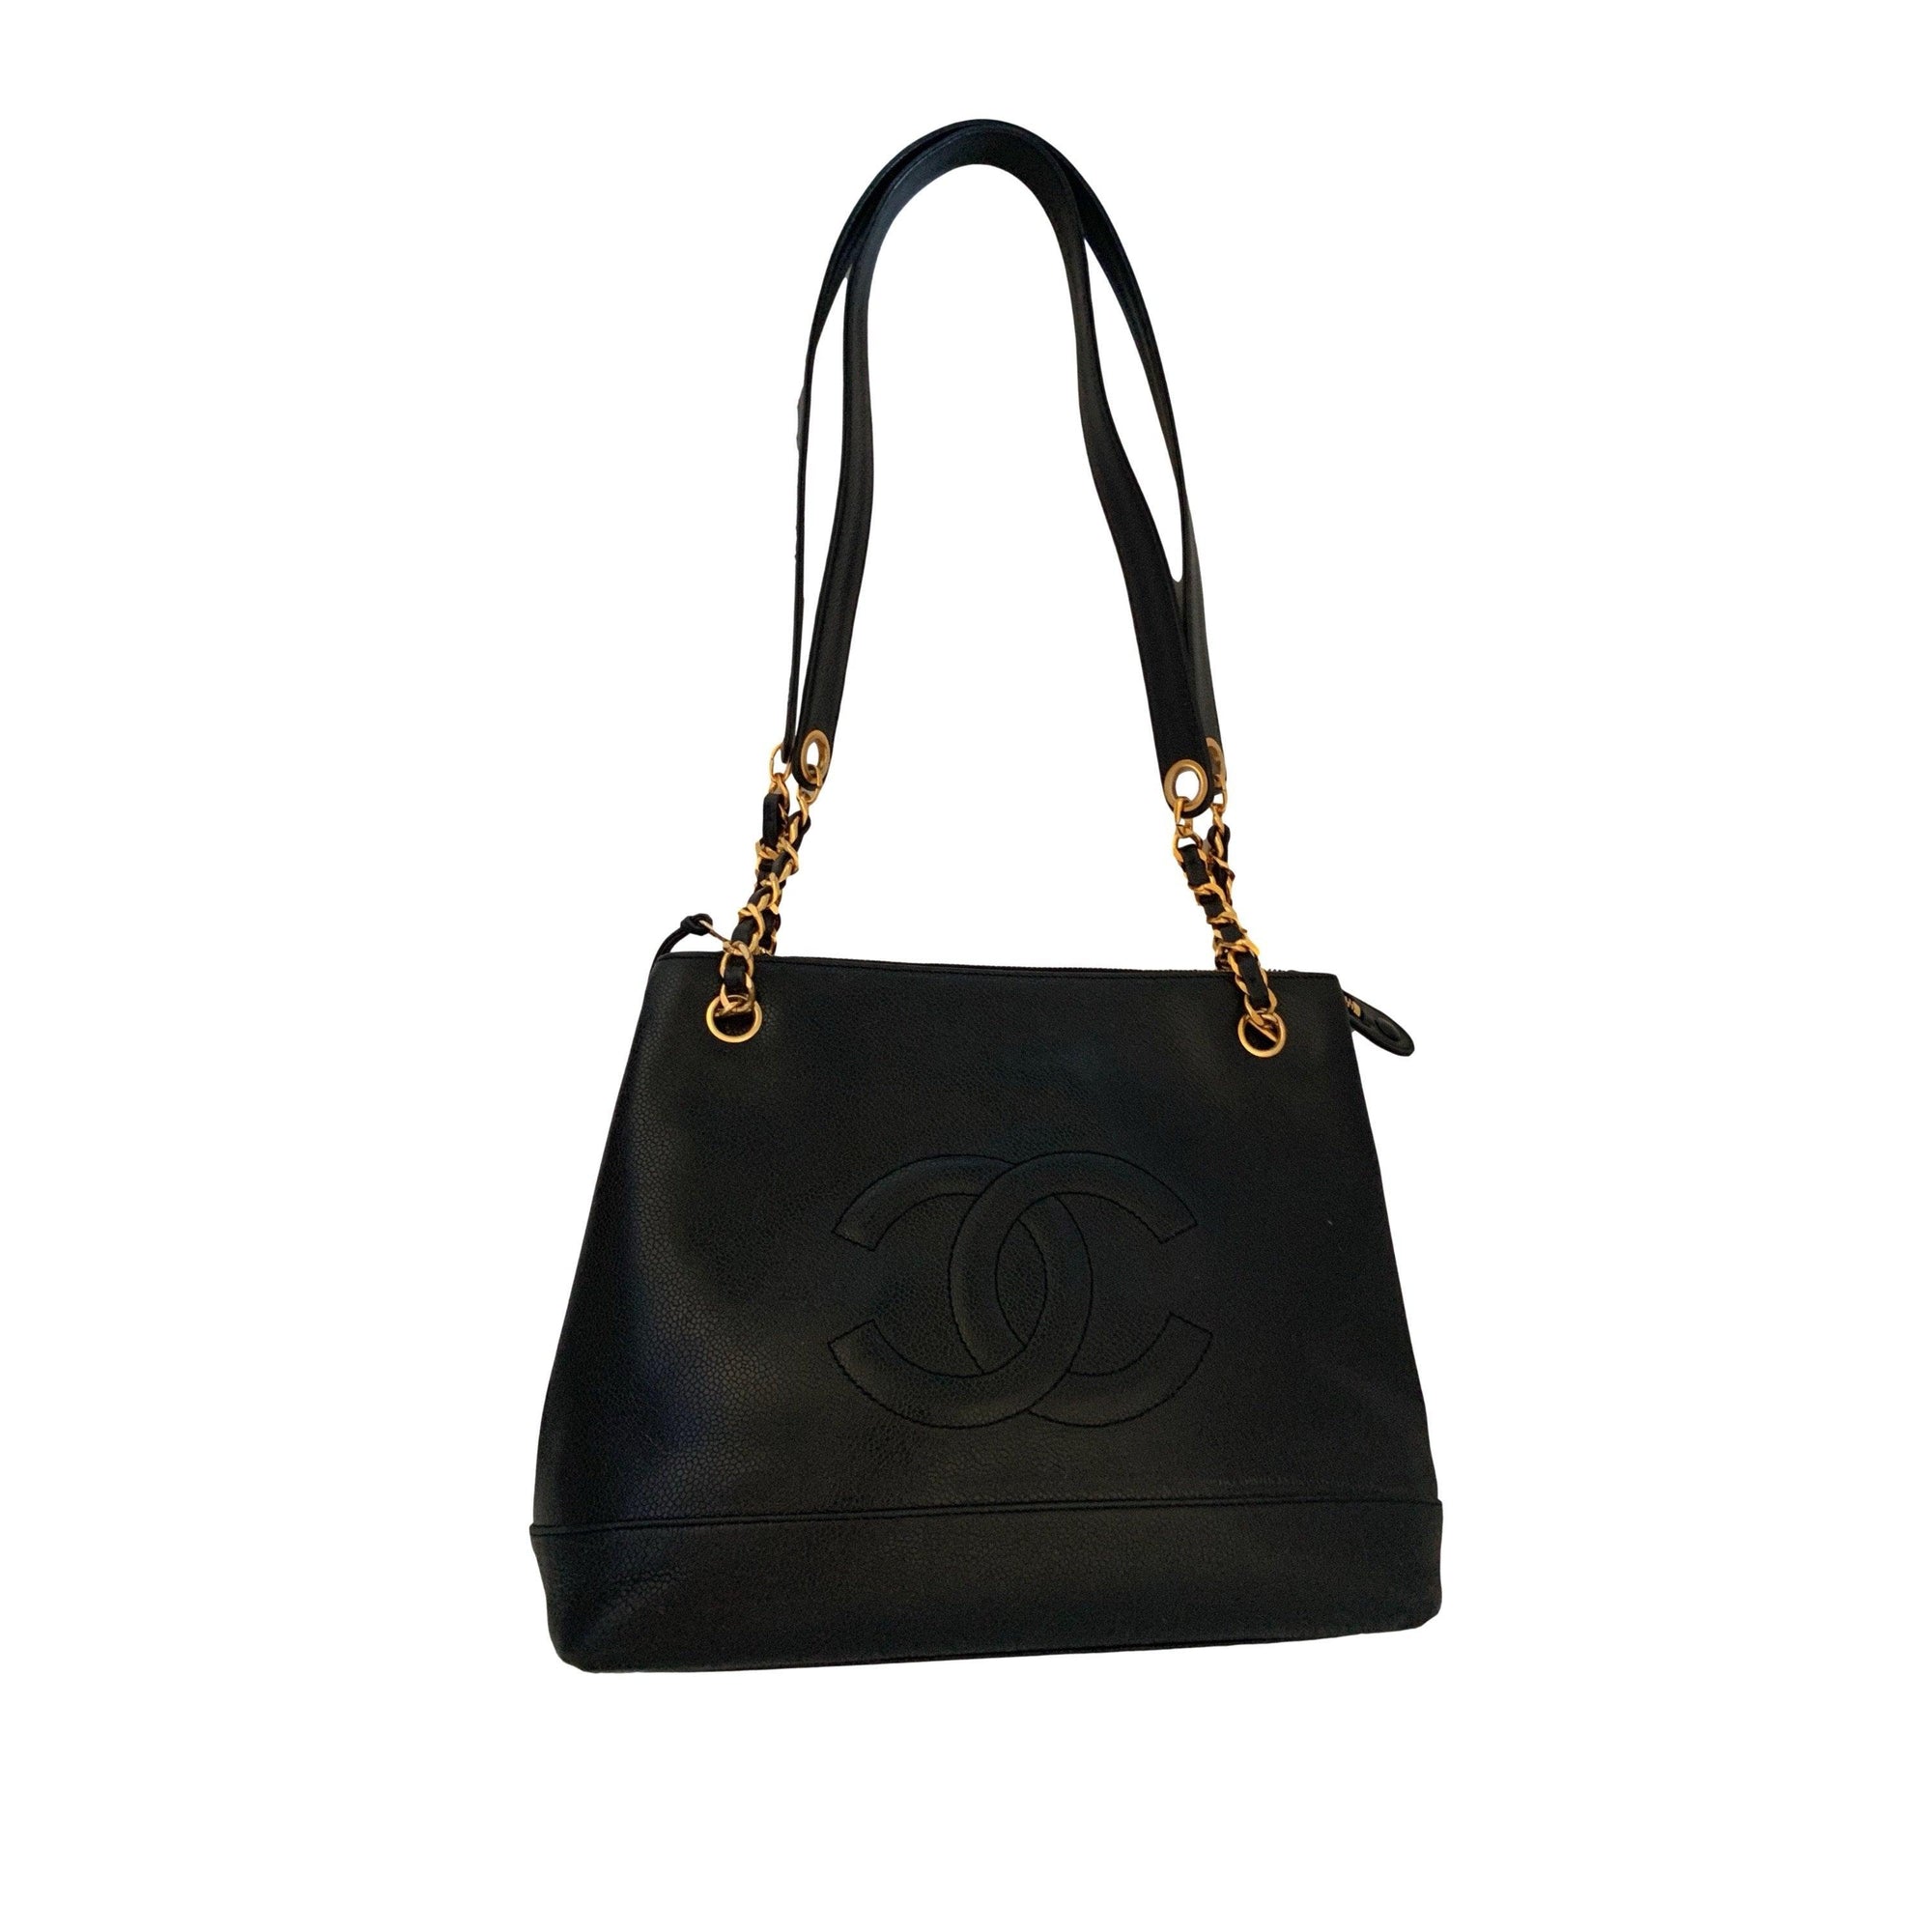 Chanel Black Large Caviar Chain Bag - Handbags